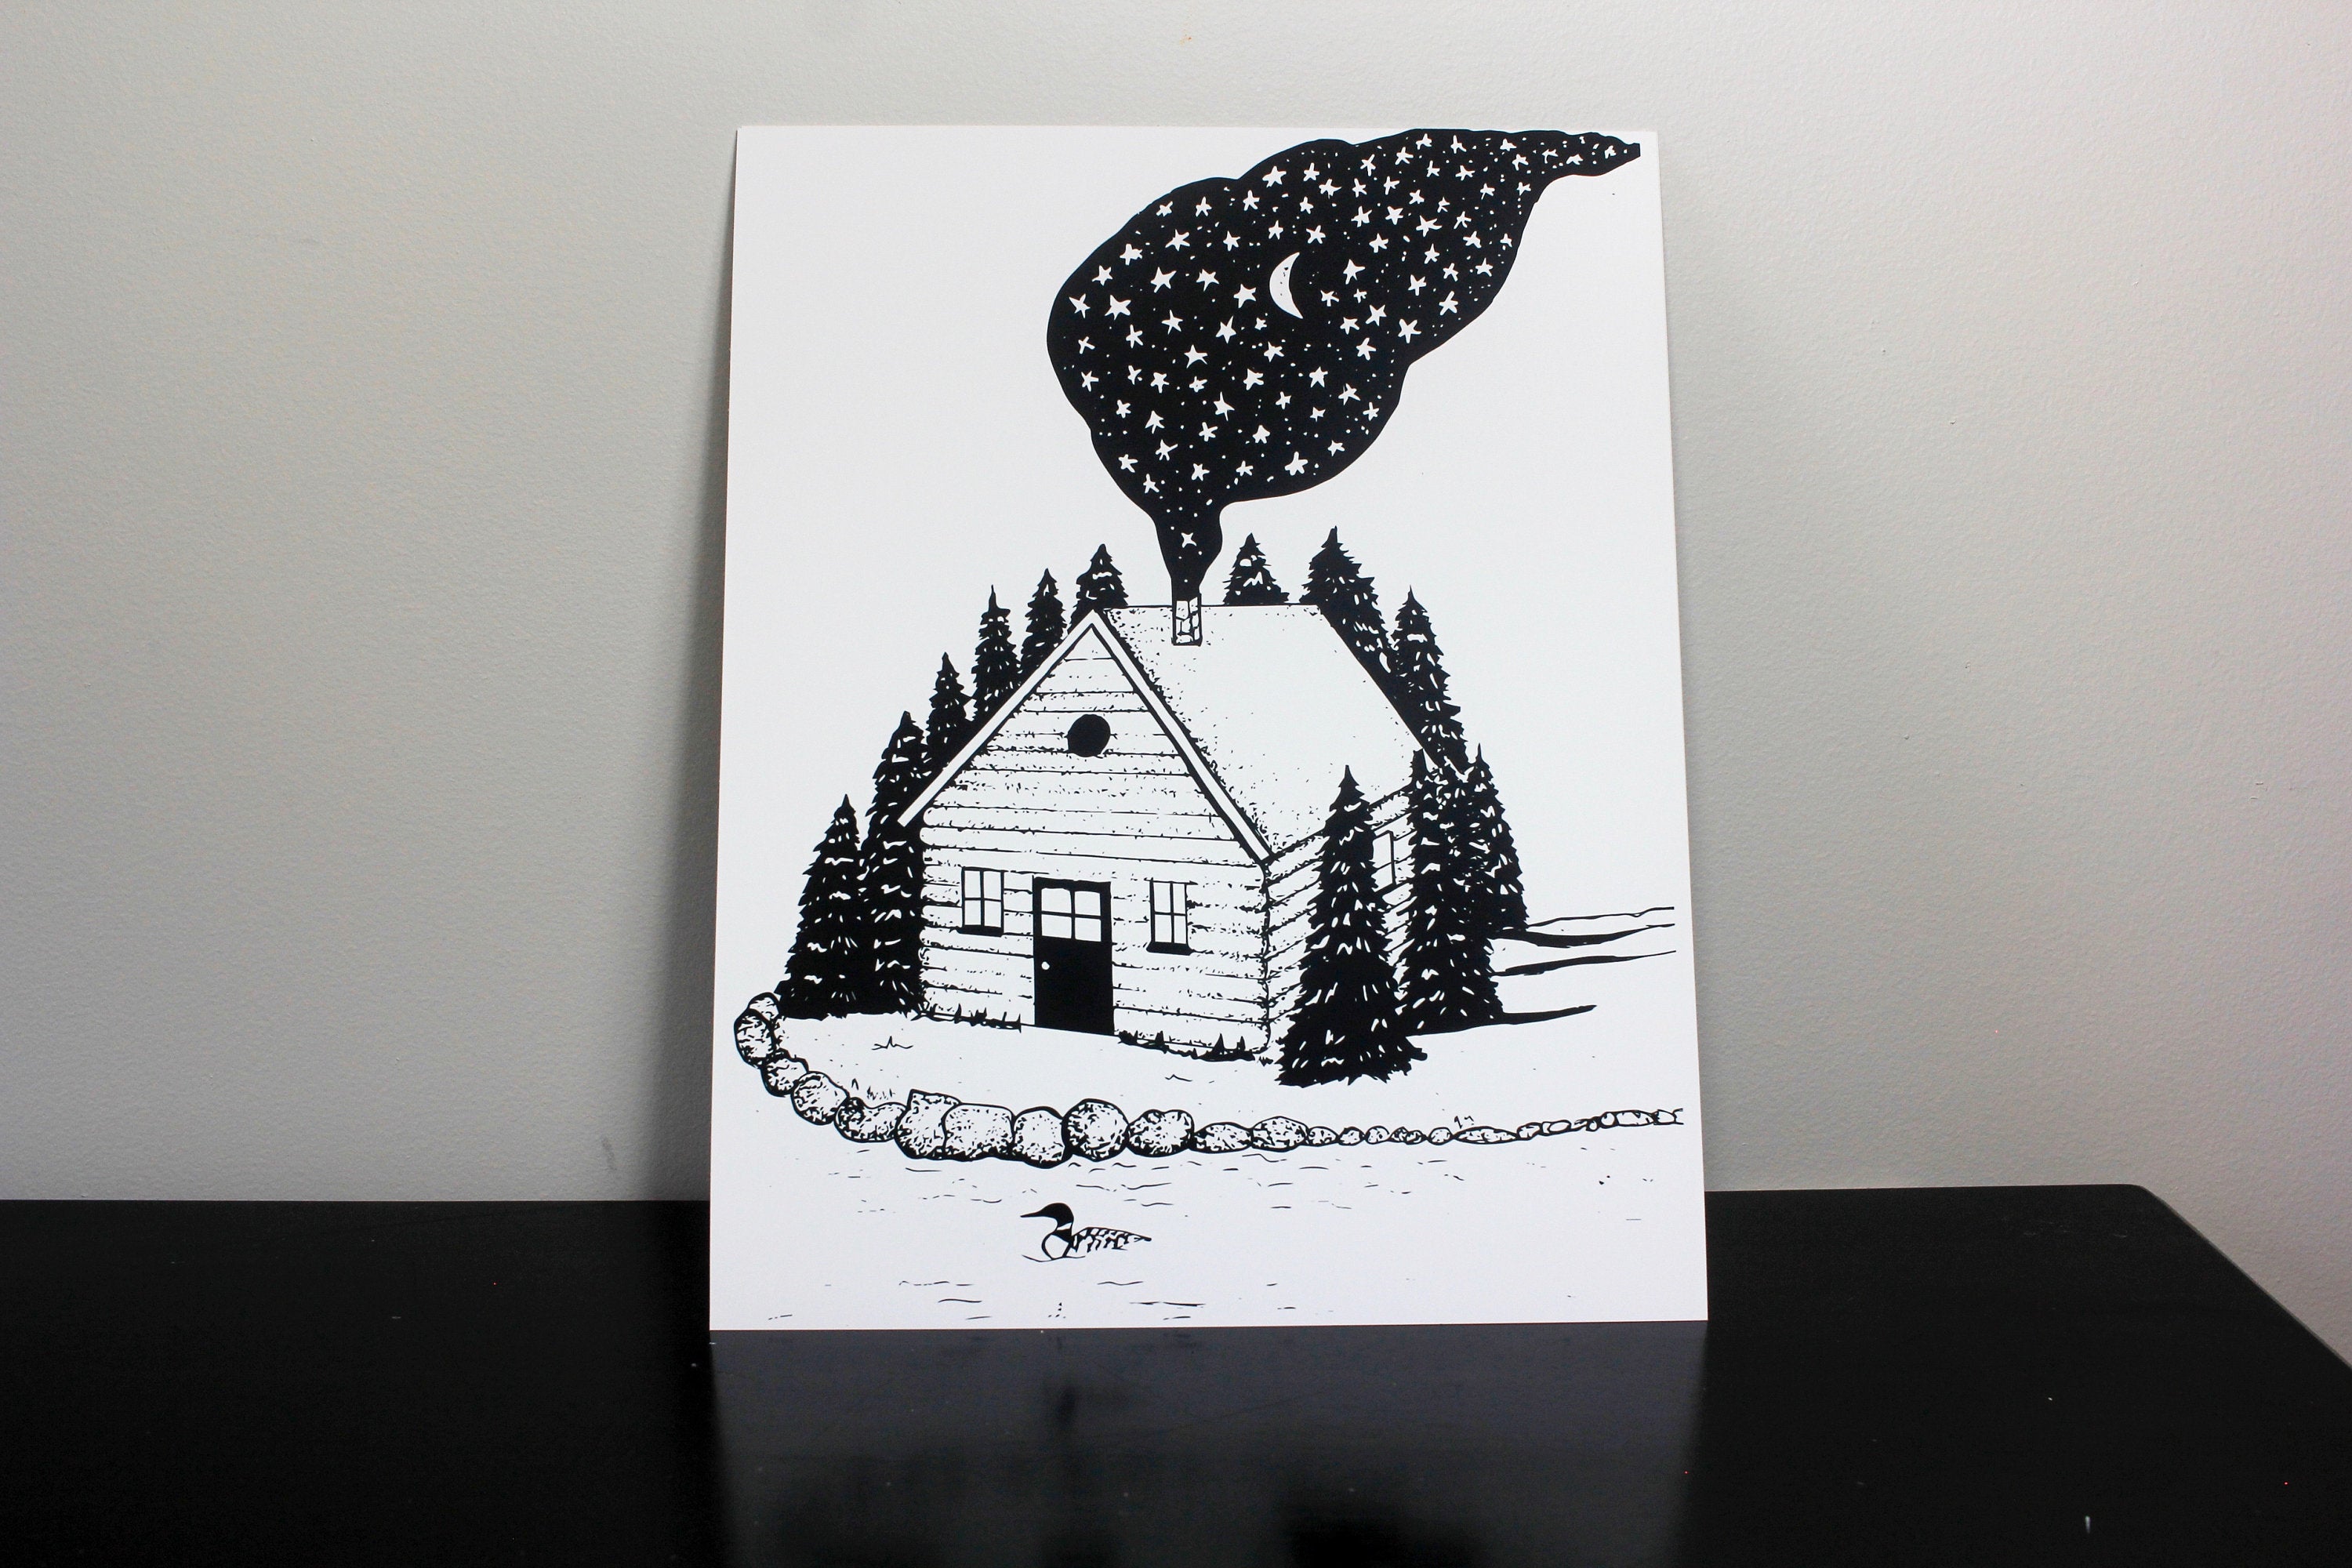 Cabin in the Woods Black and White Art Print-Print-Roam Wild Designs